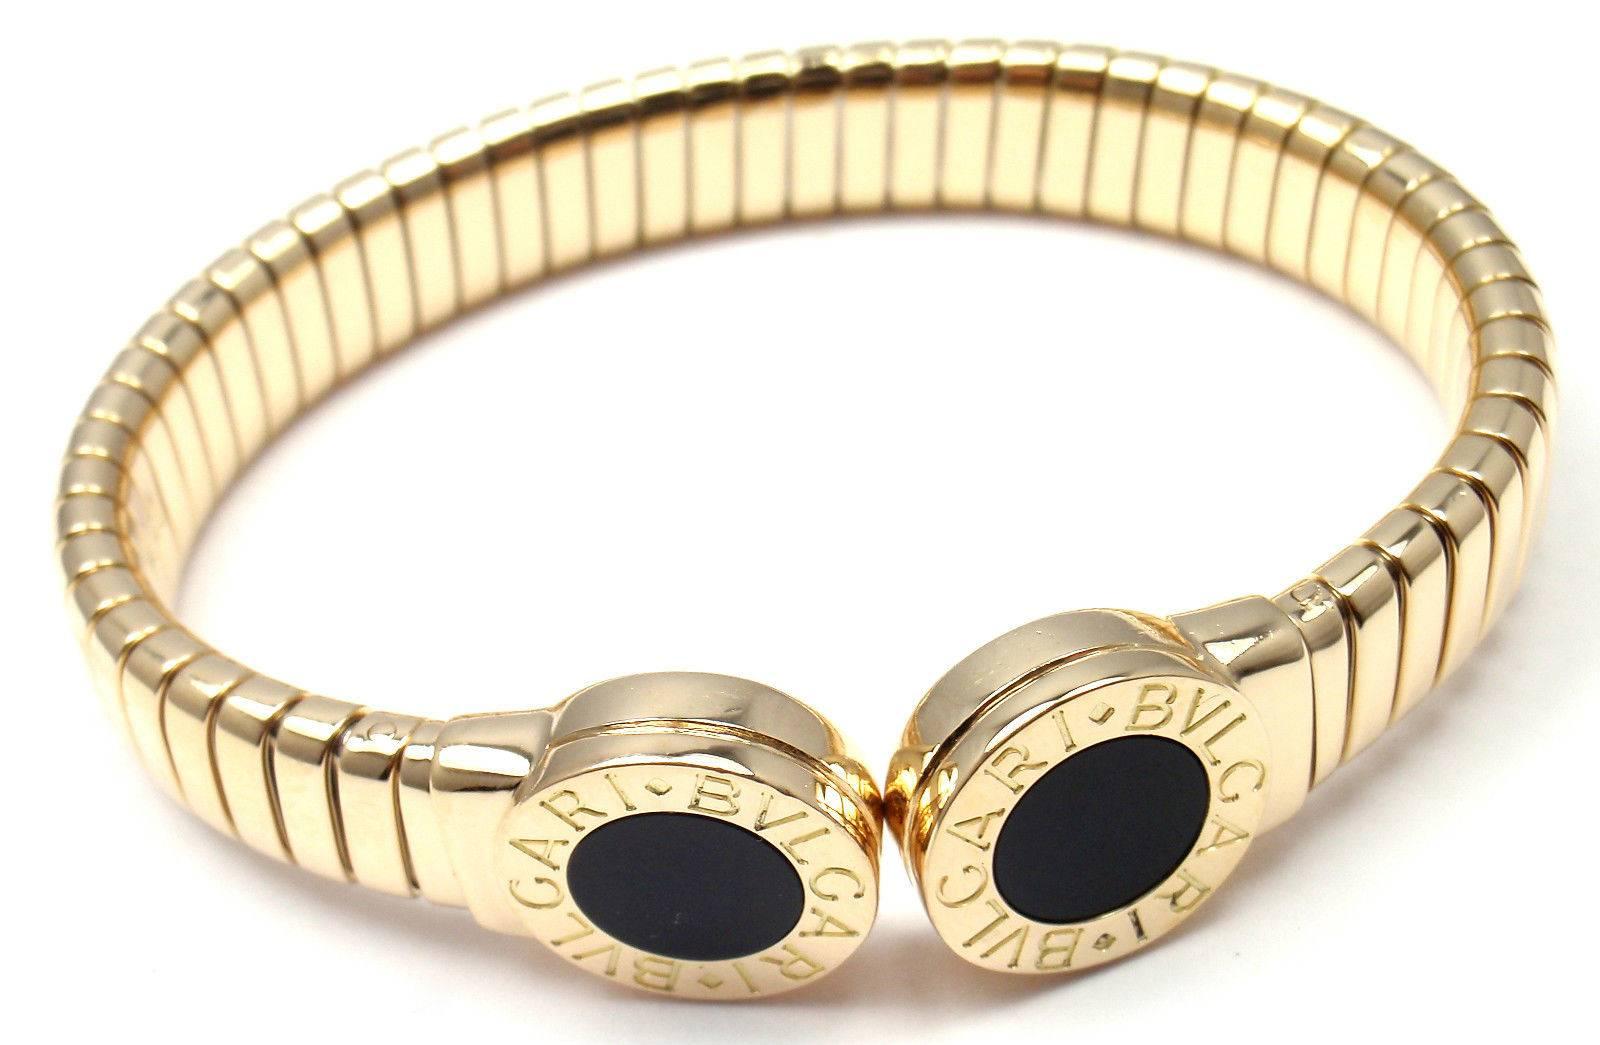 18k Yellow Gold Tubogas Black Onyx Bangle Bracelet by Bulgari. 
With 2 round black onyx stones 8mm each.

Details: 
Length: 6.5